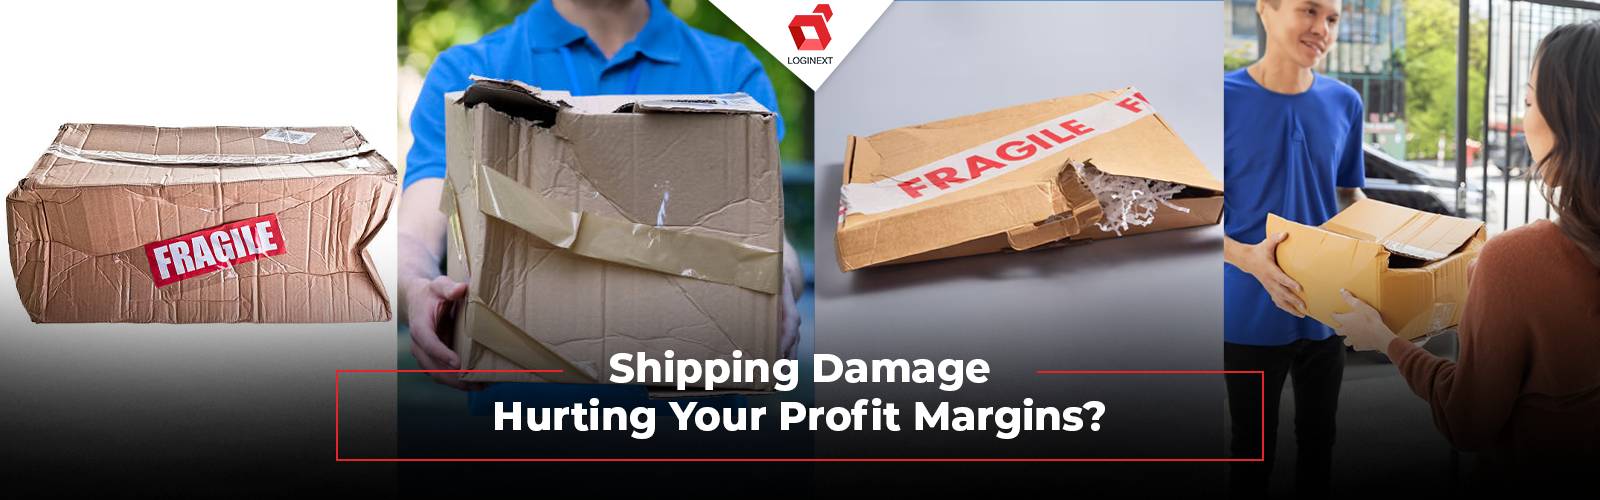 Shipping Damaged Goods Hurting Your Profit Margins?